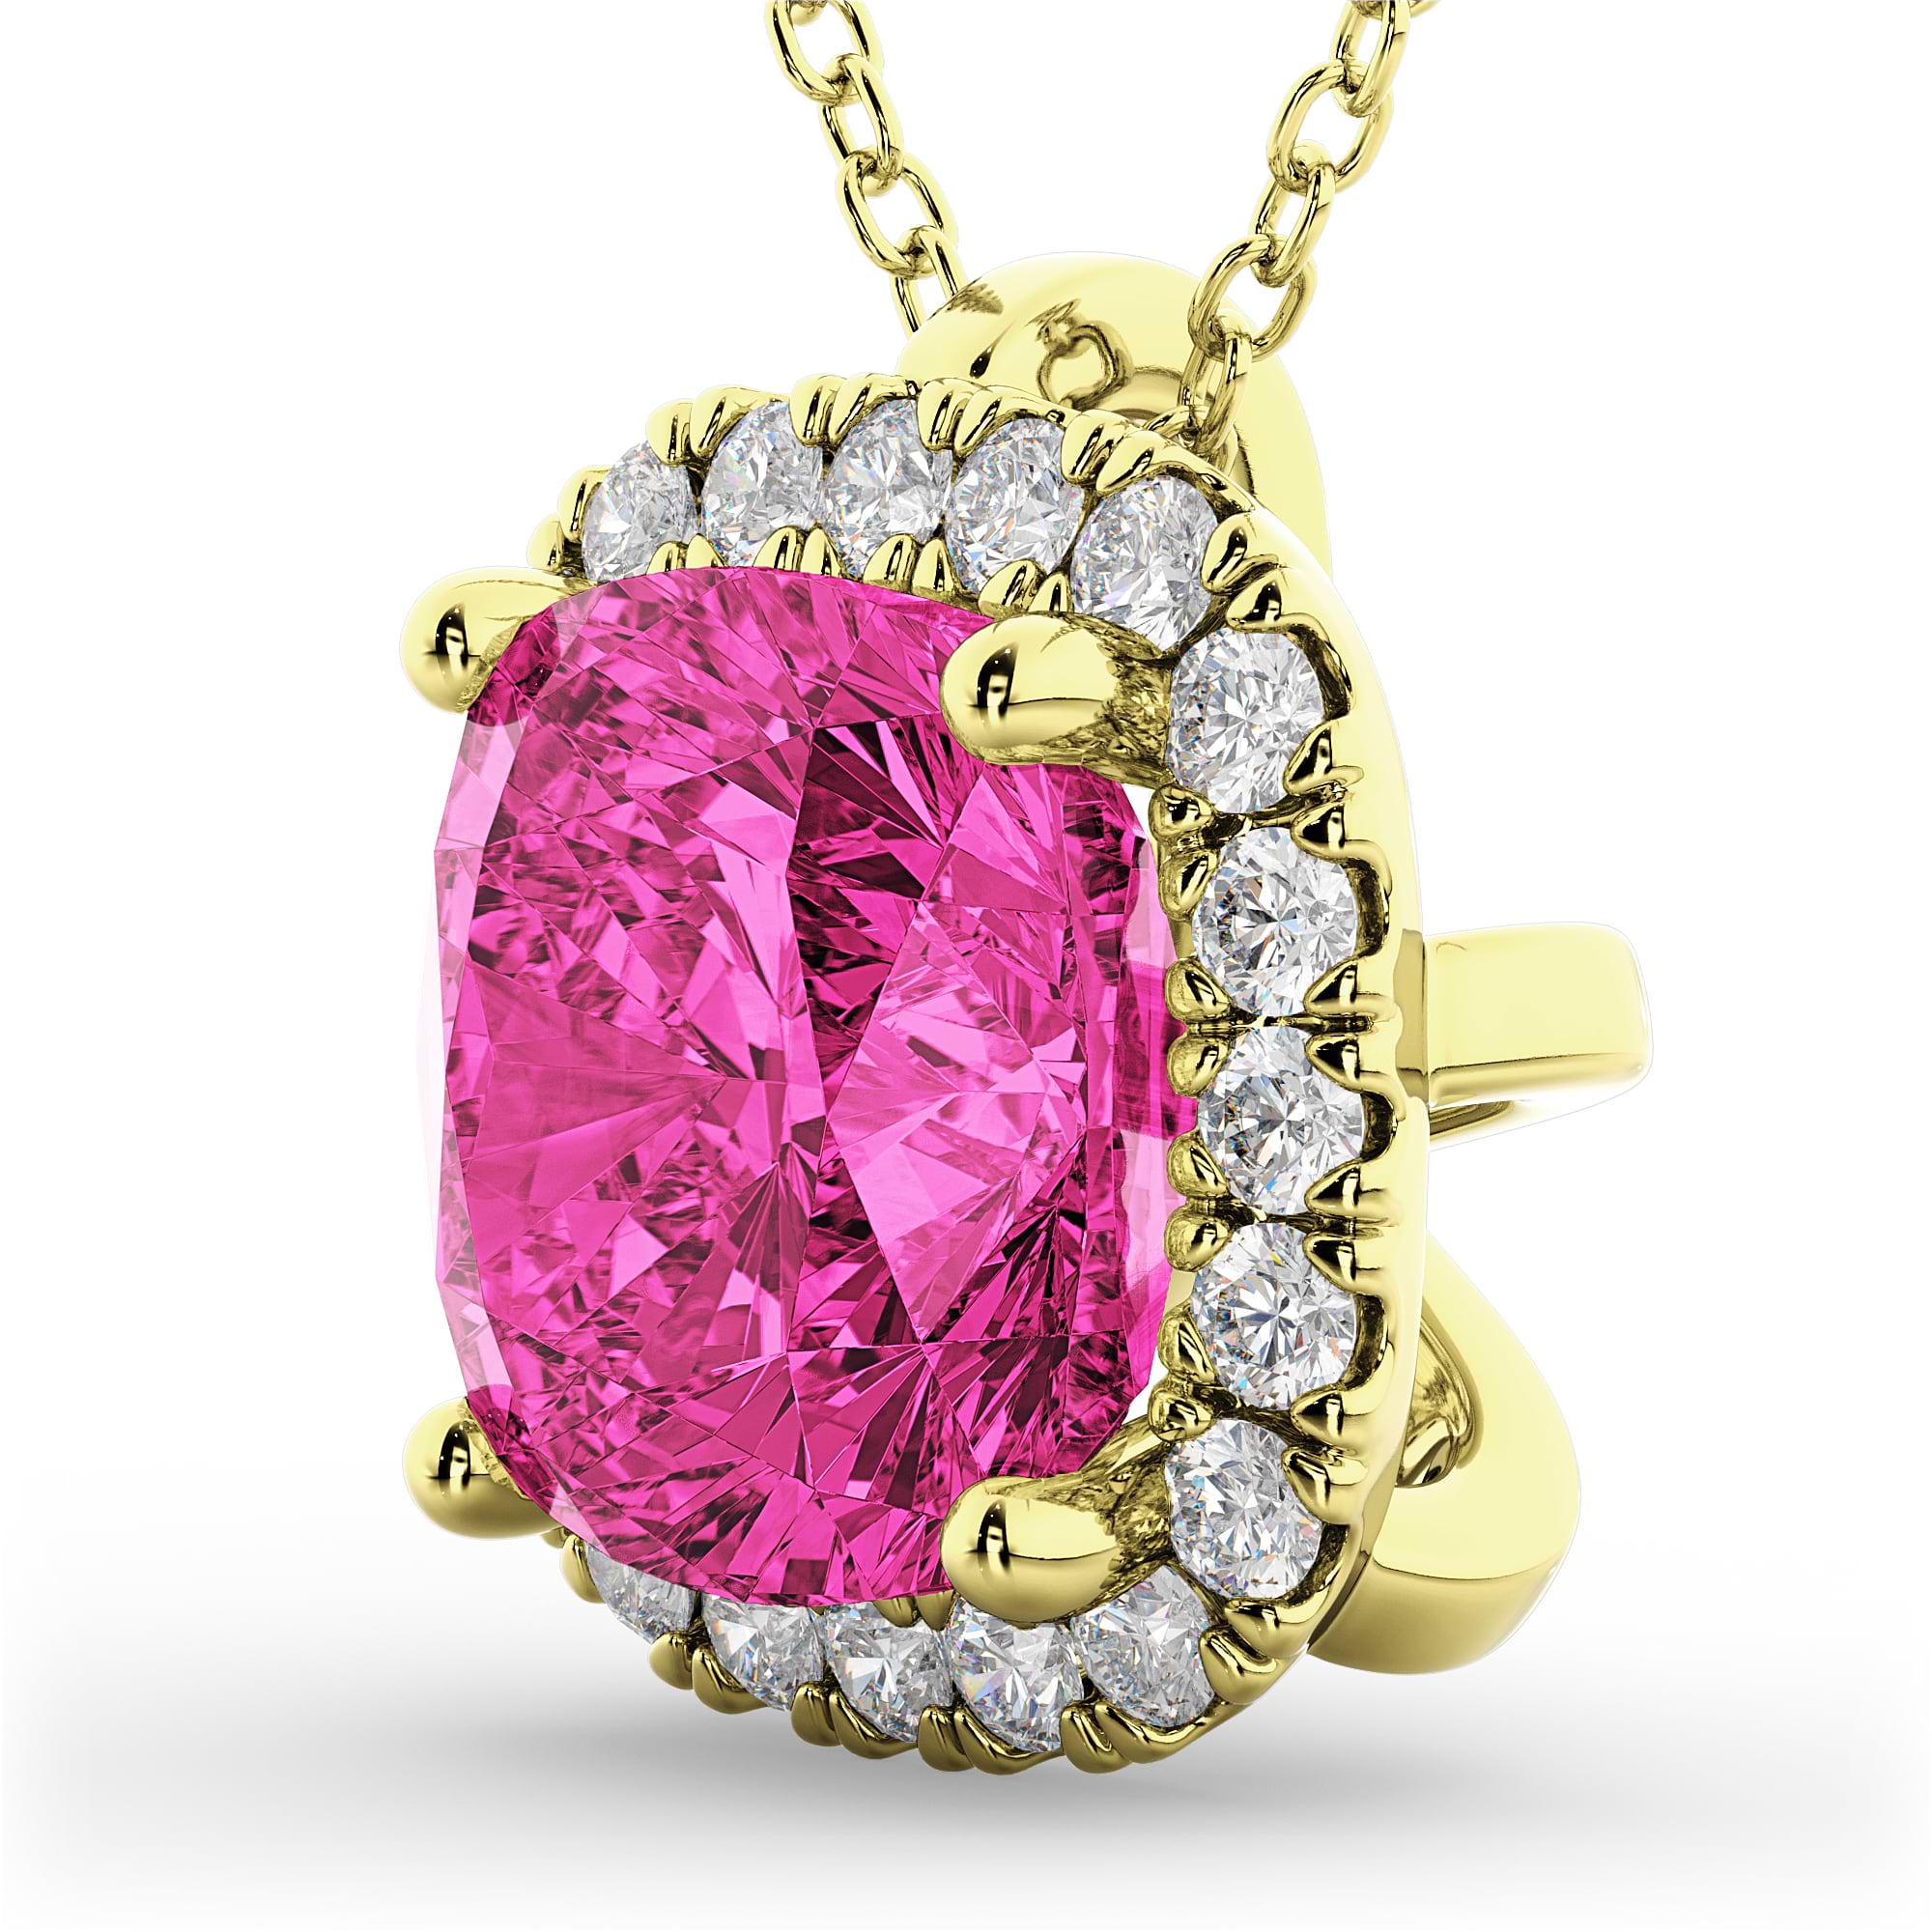 Halo Pink Tourmaline Cushion Cut Pendant Necklace 14k Yellow Gold (2.02ct)